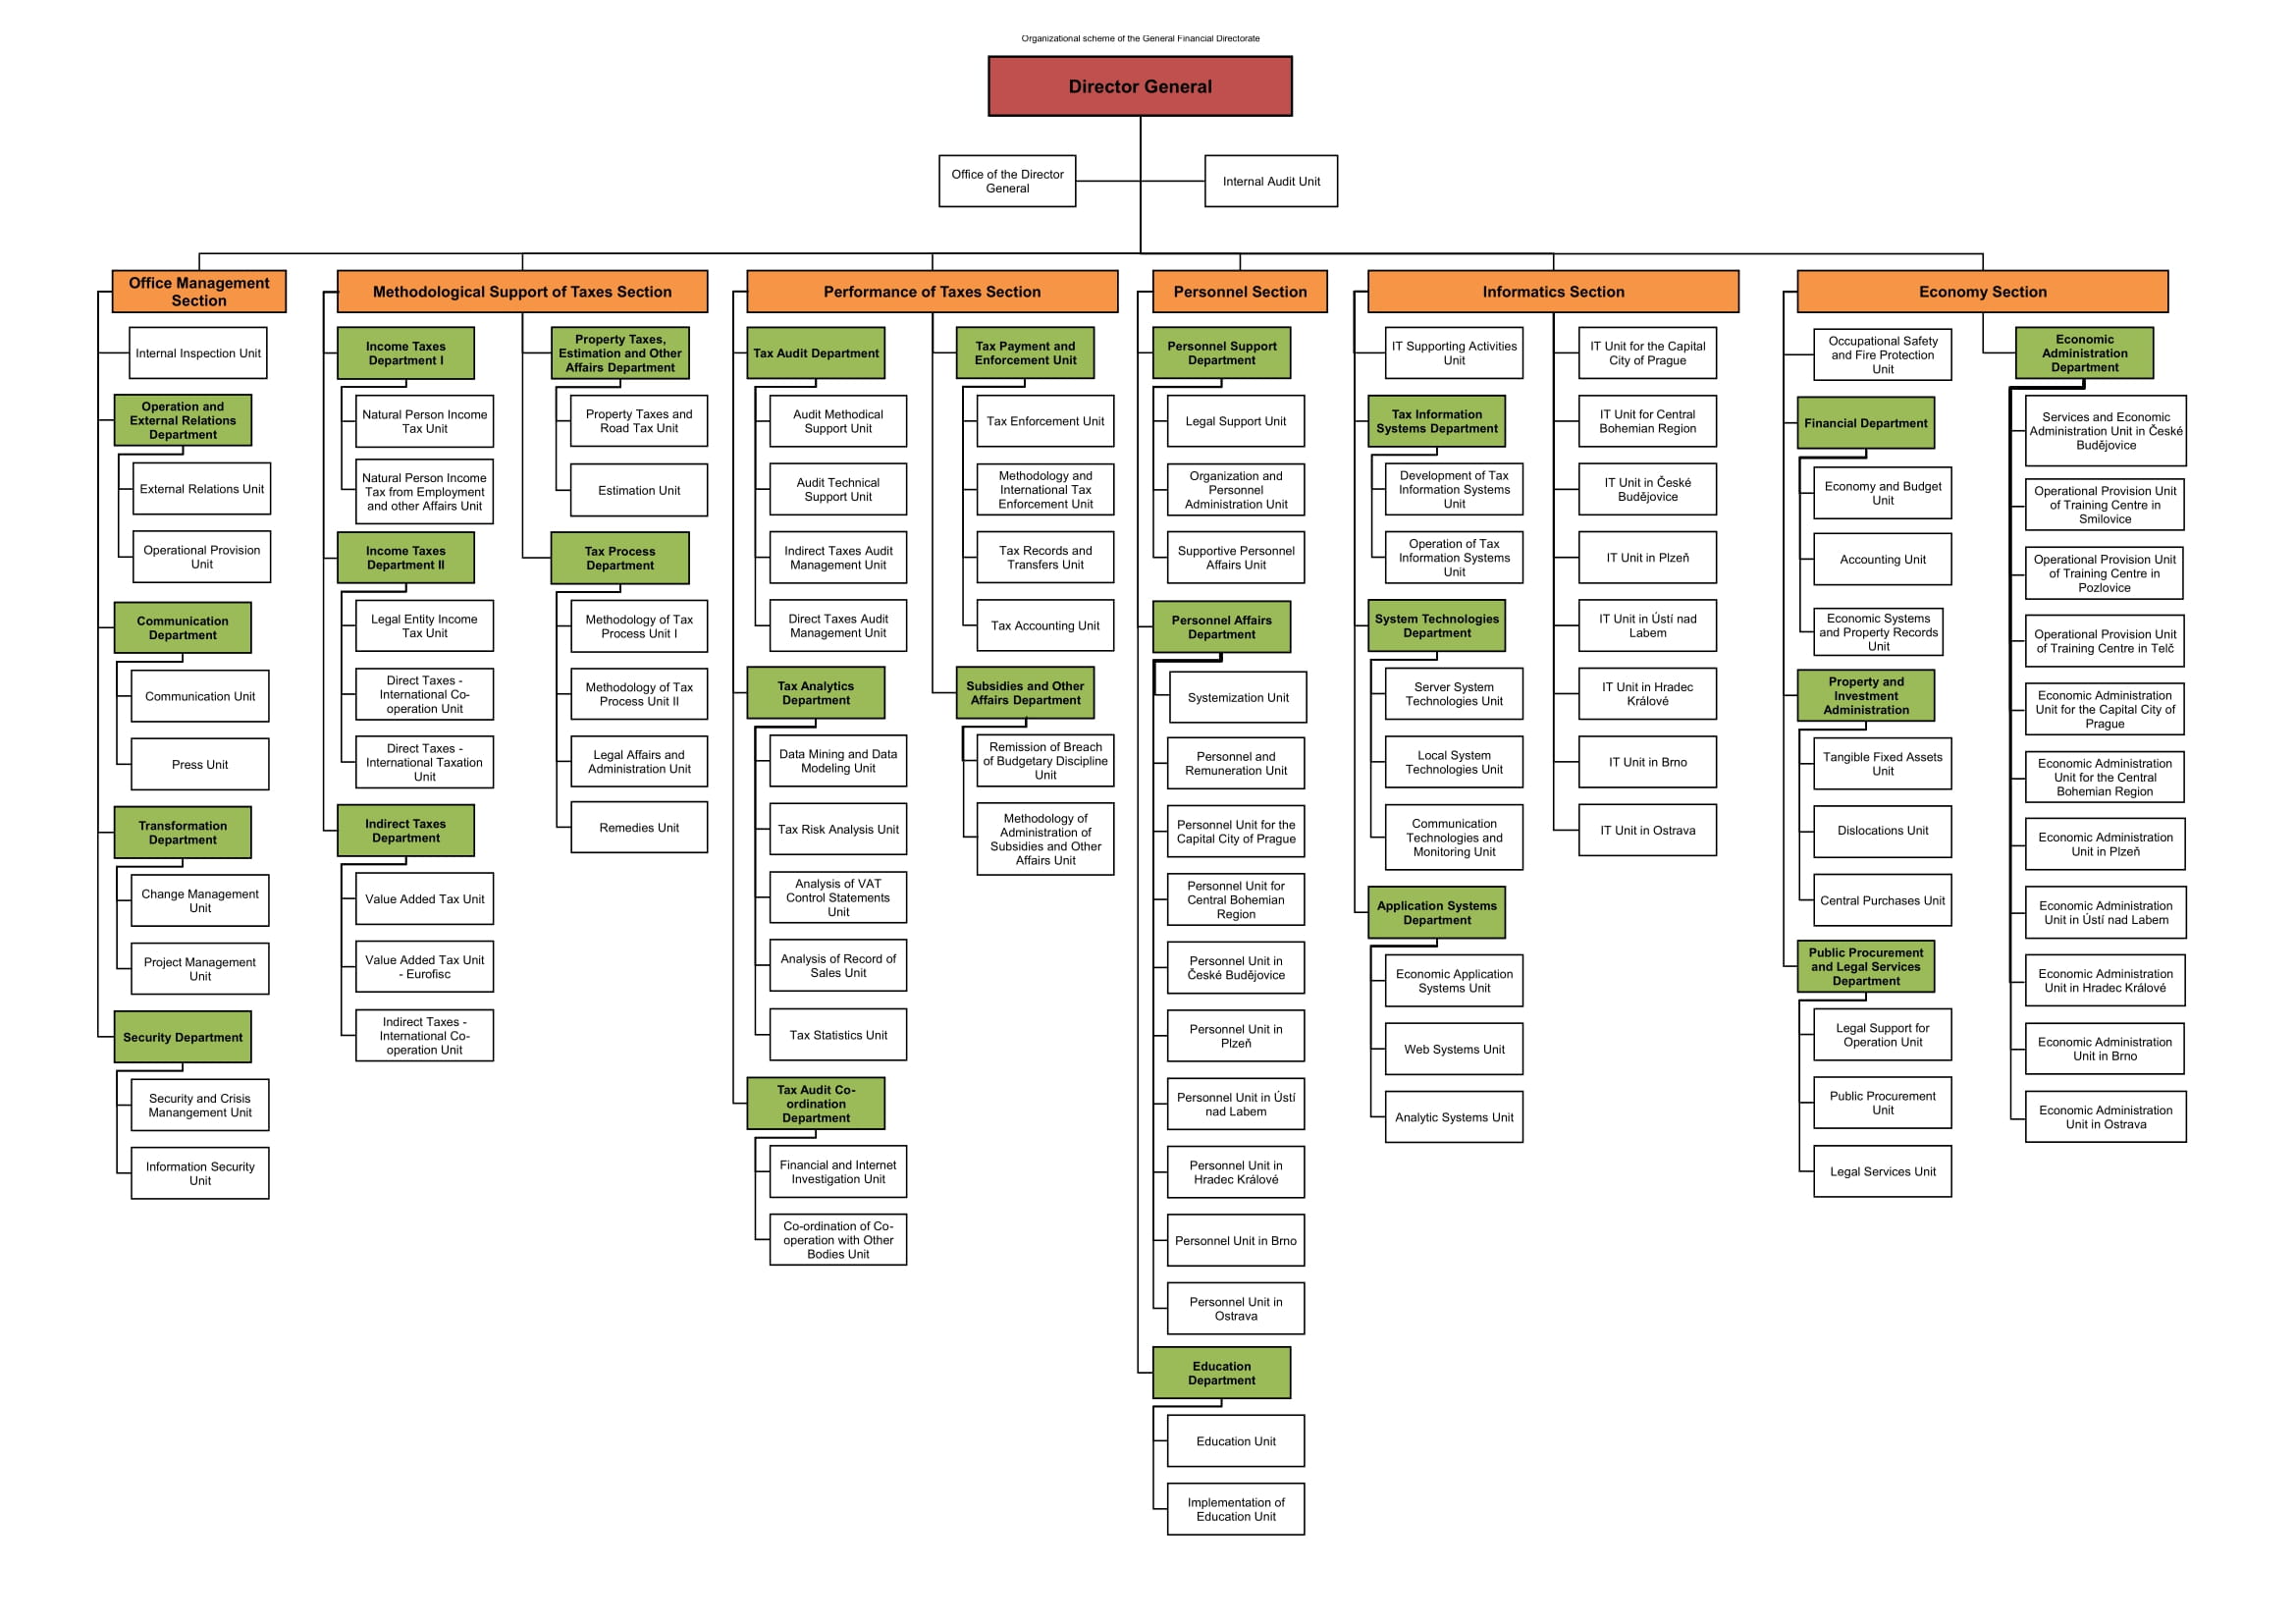 Organization structure - graphic version